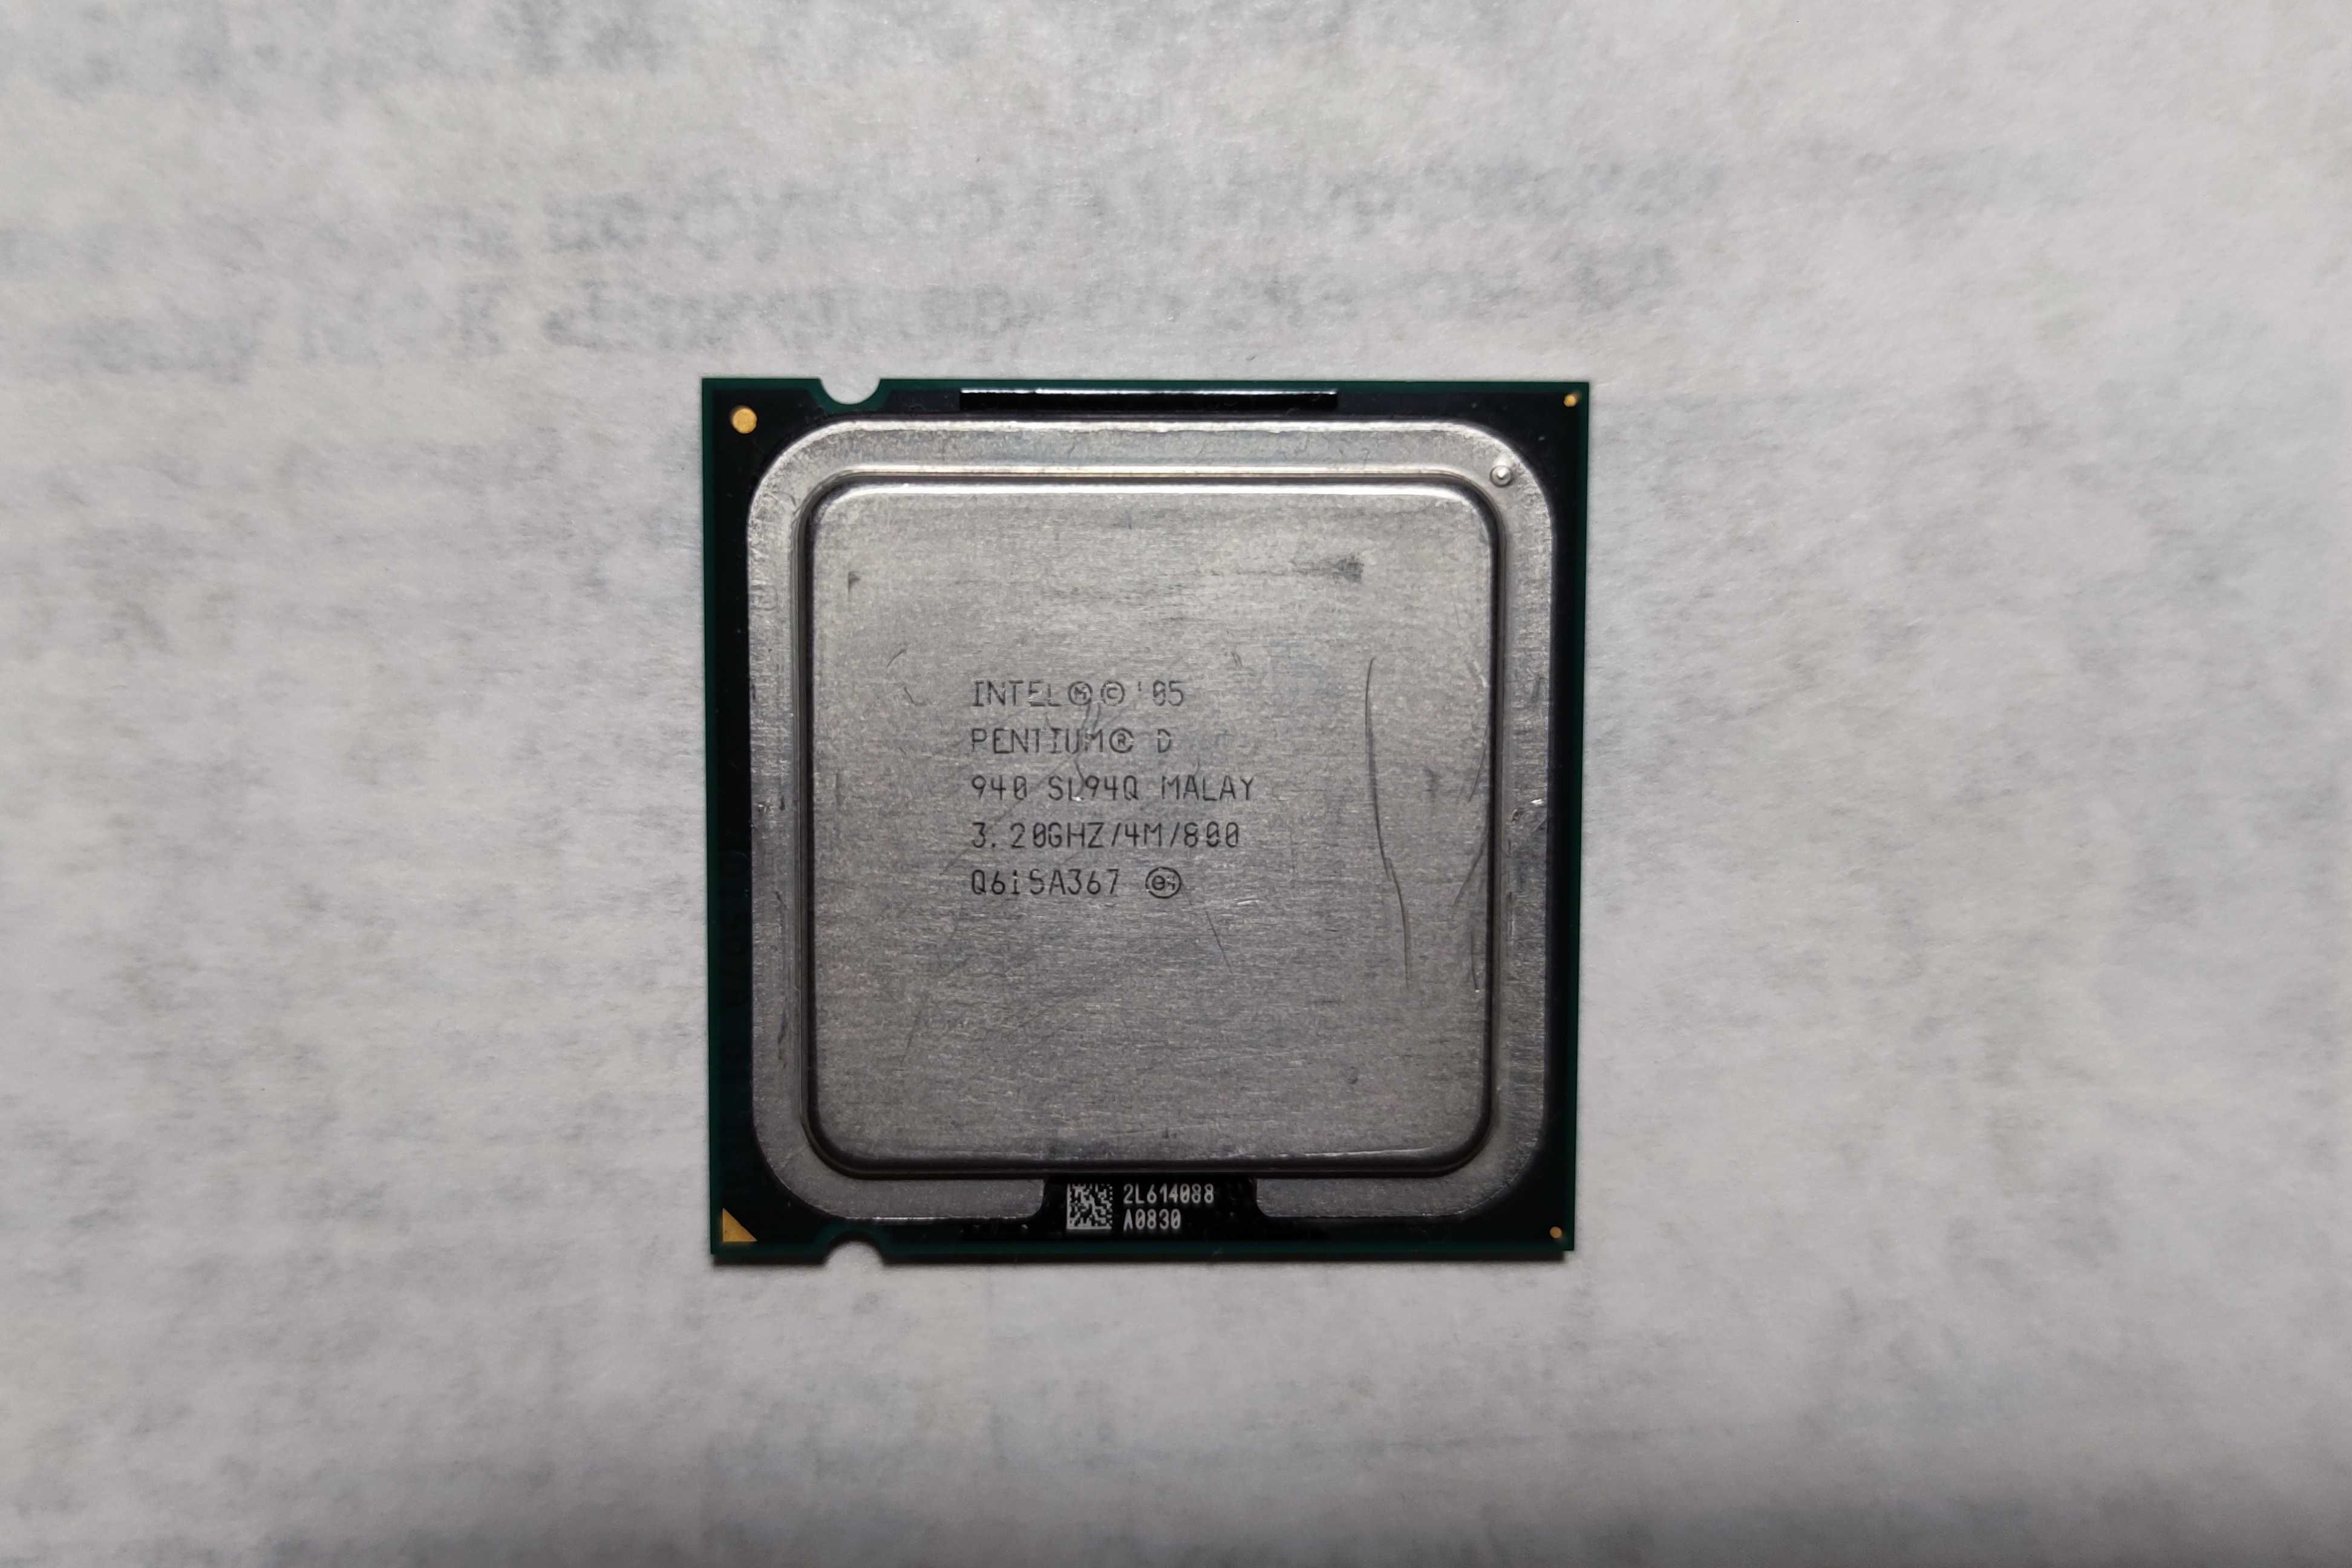 Процессор Intel Pentium D 940 3.2GHz/4M/800 s775